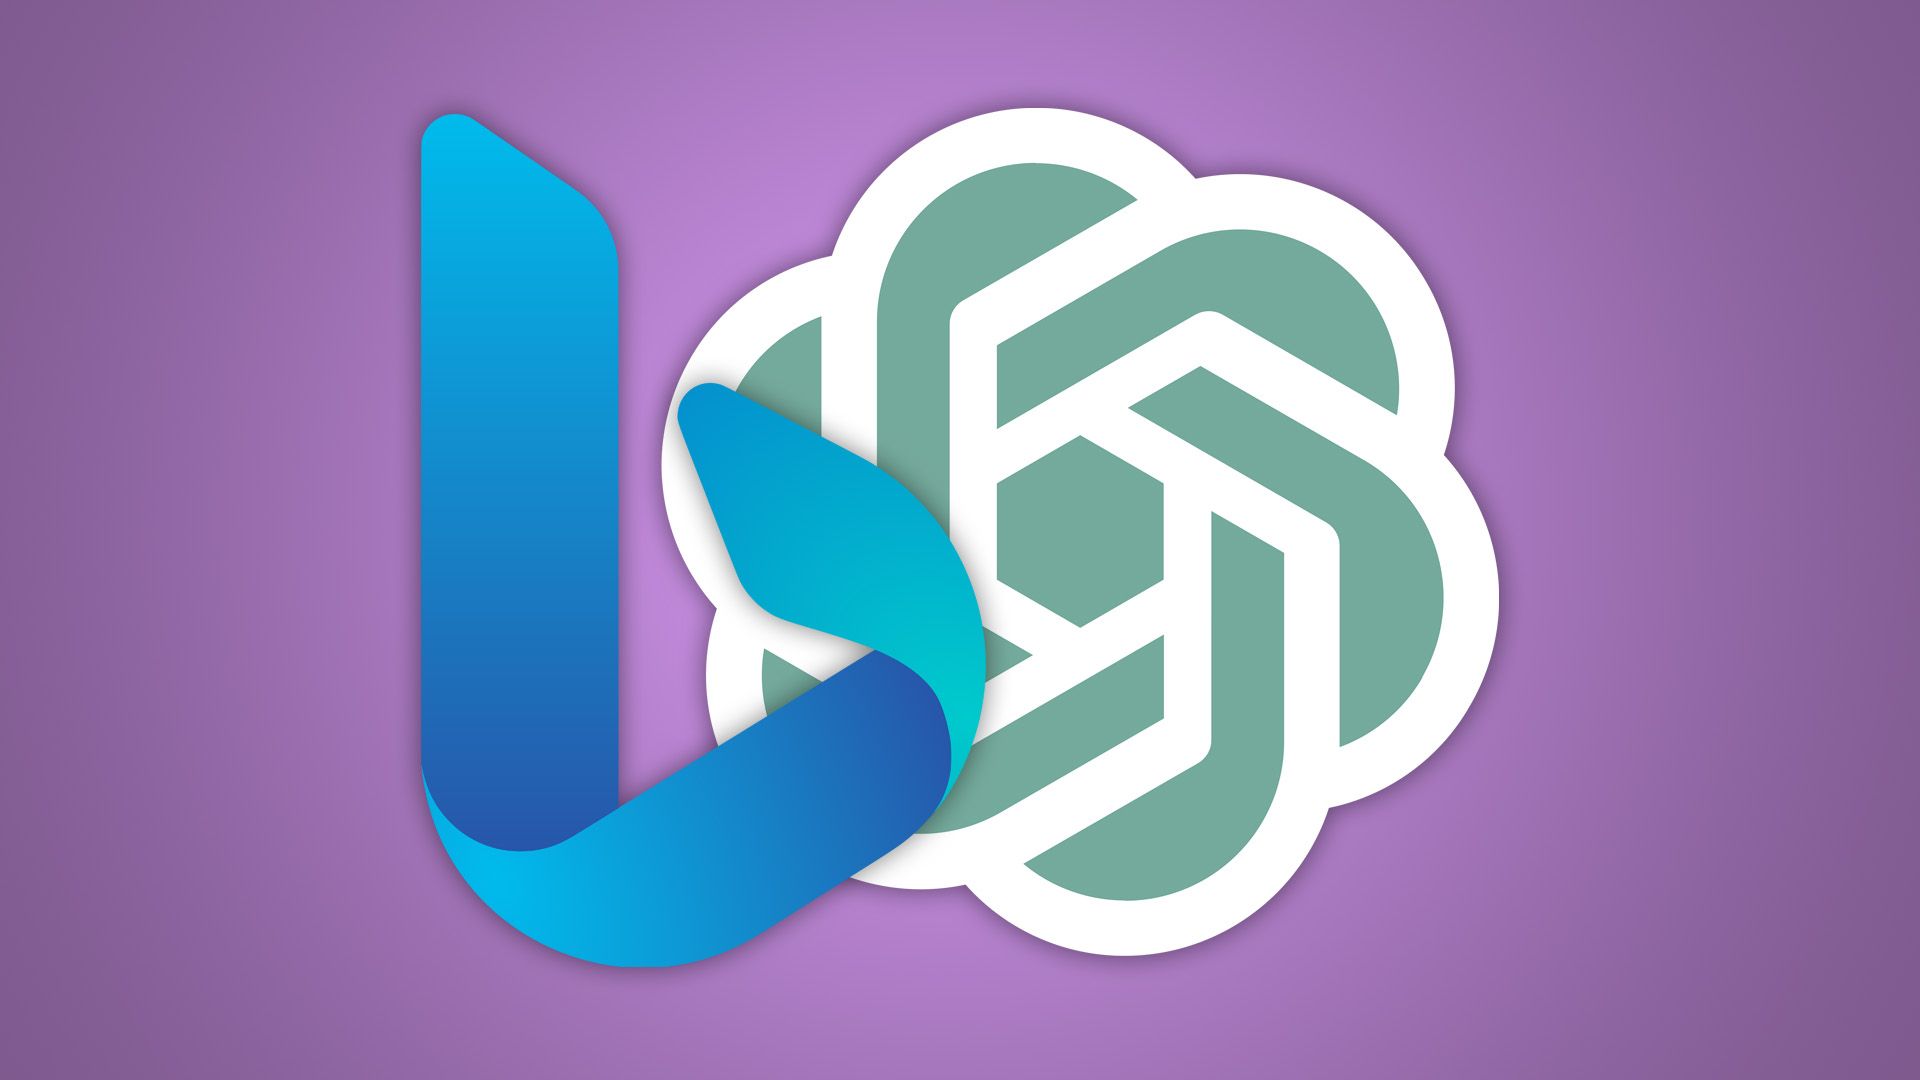 ChatGPT and Bing logos